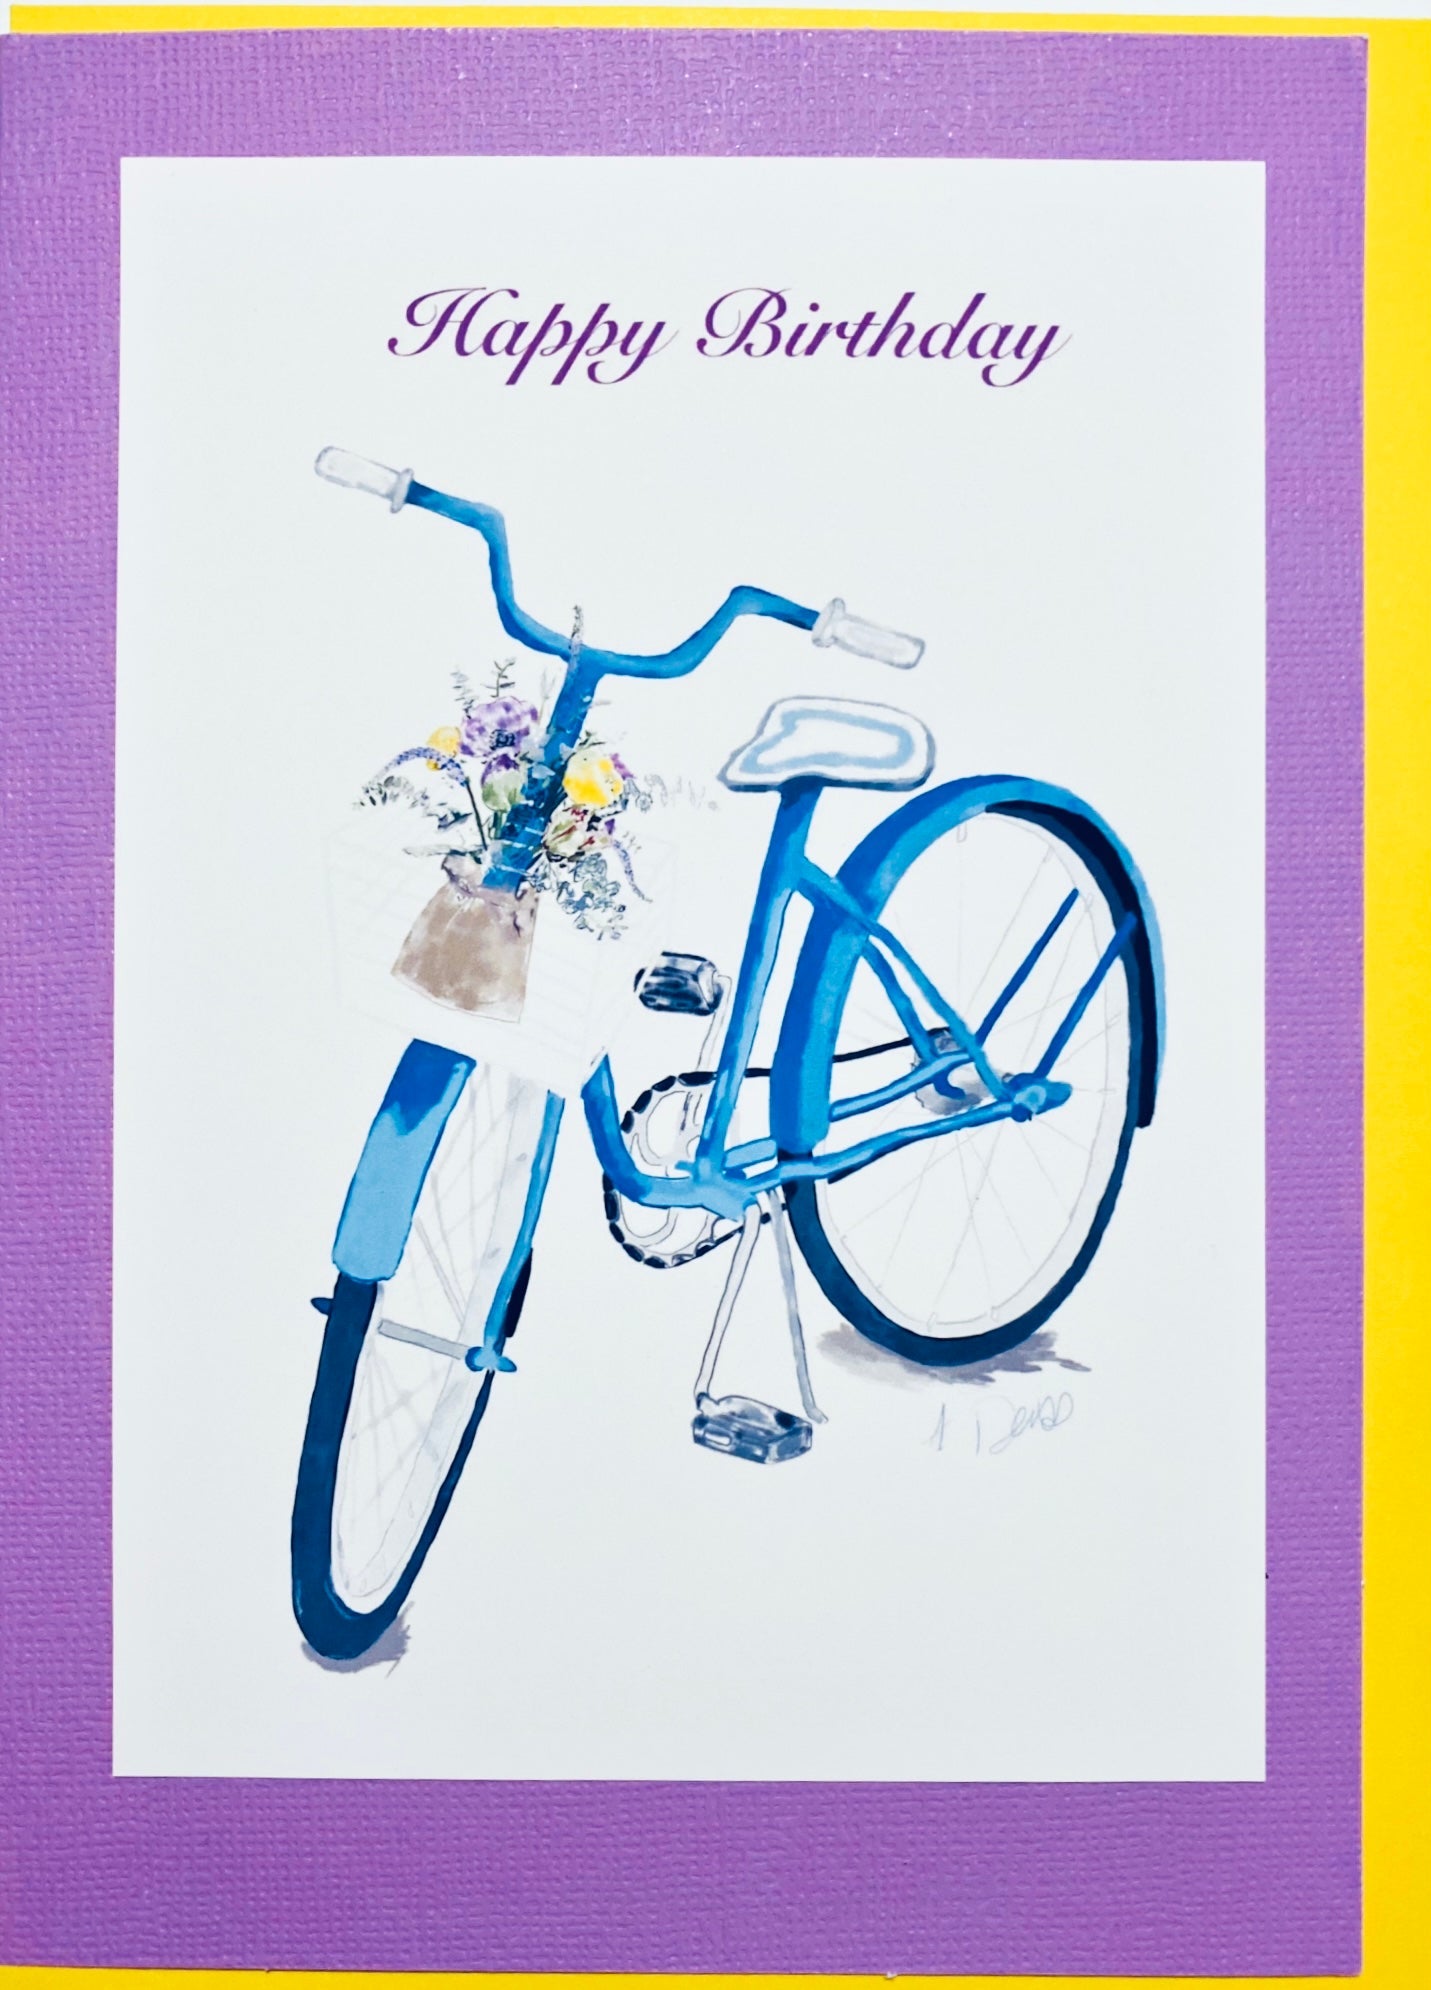 Happy Birthday Bike and Bouquet card - Blue Cava